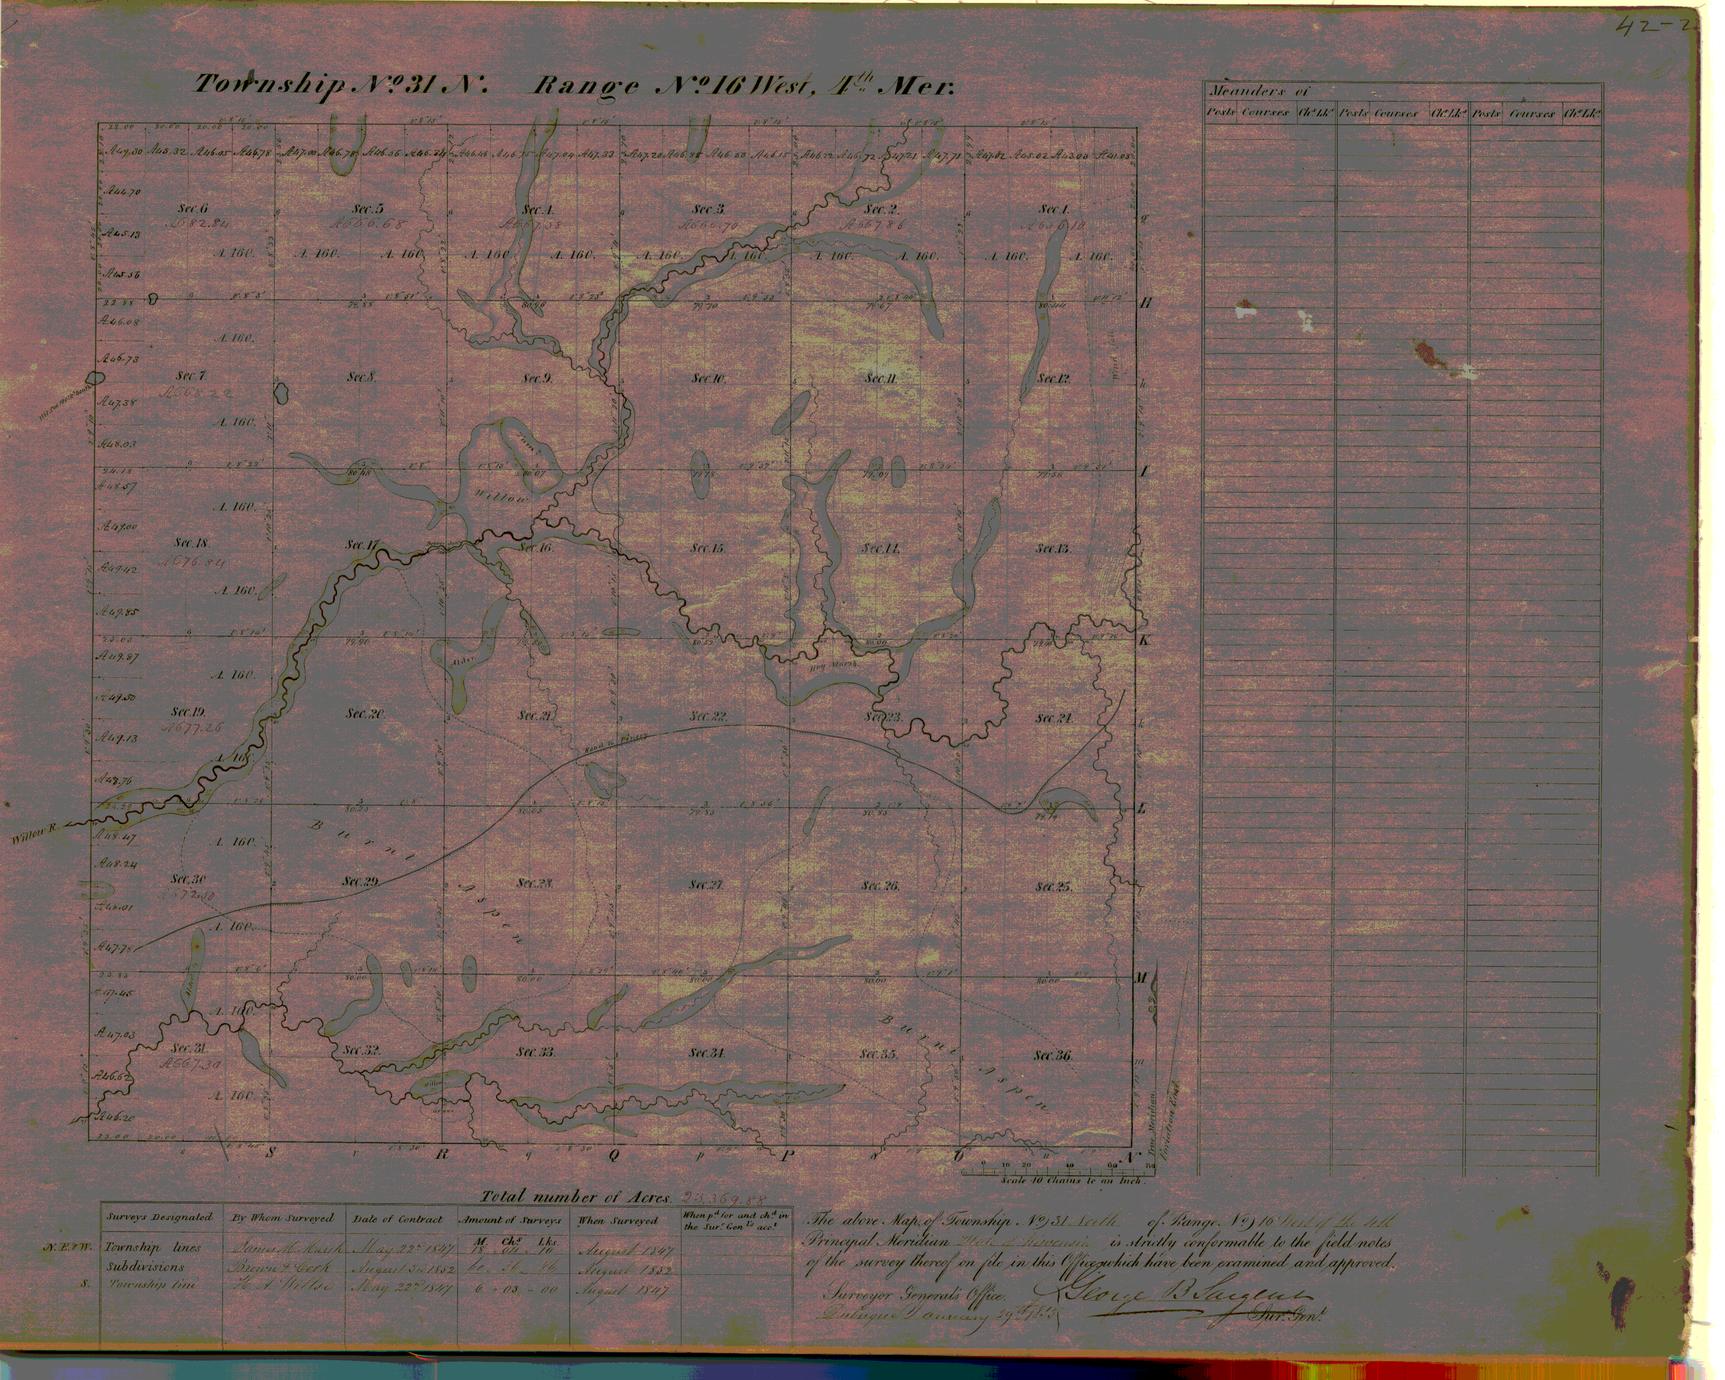 [Public Land Survey System map: Wisconsin Township 31 North, Range 16 West]